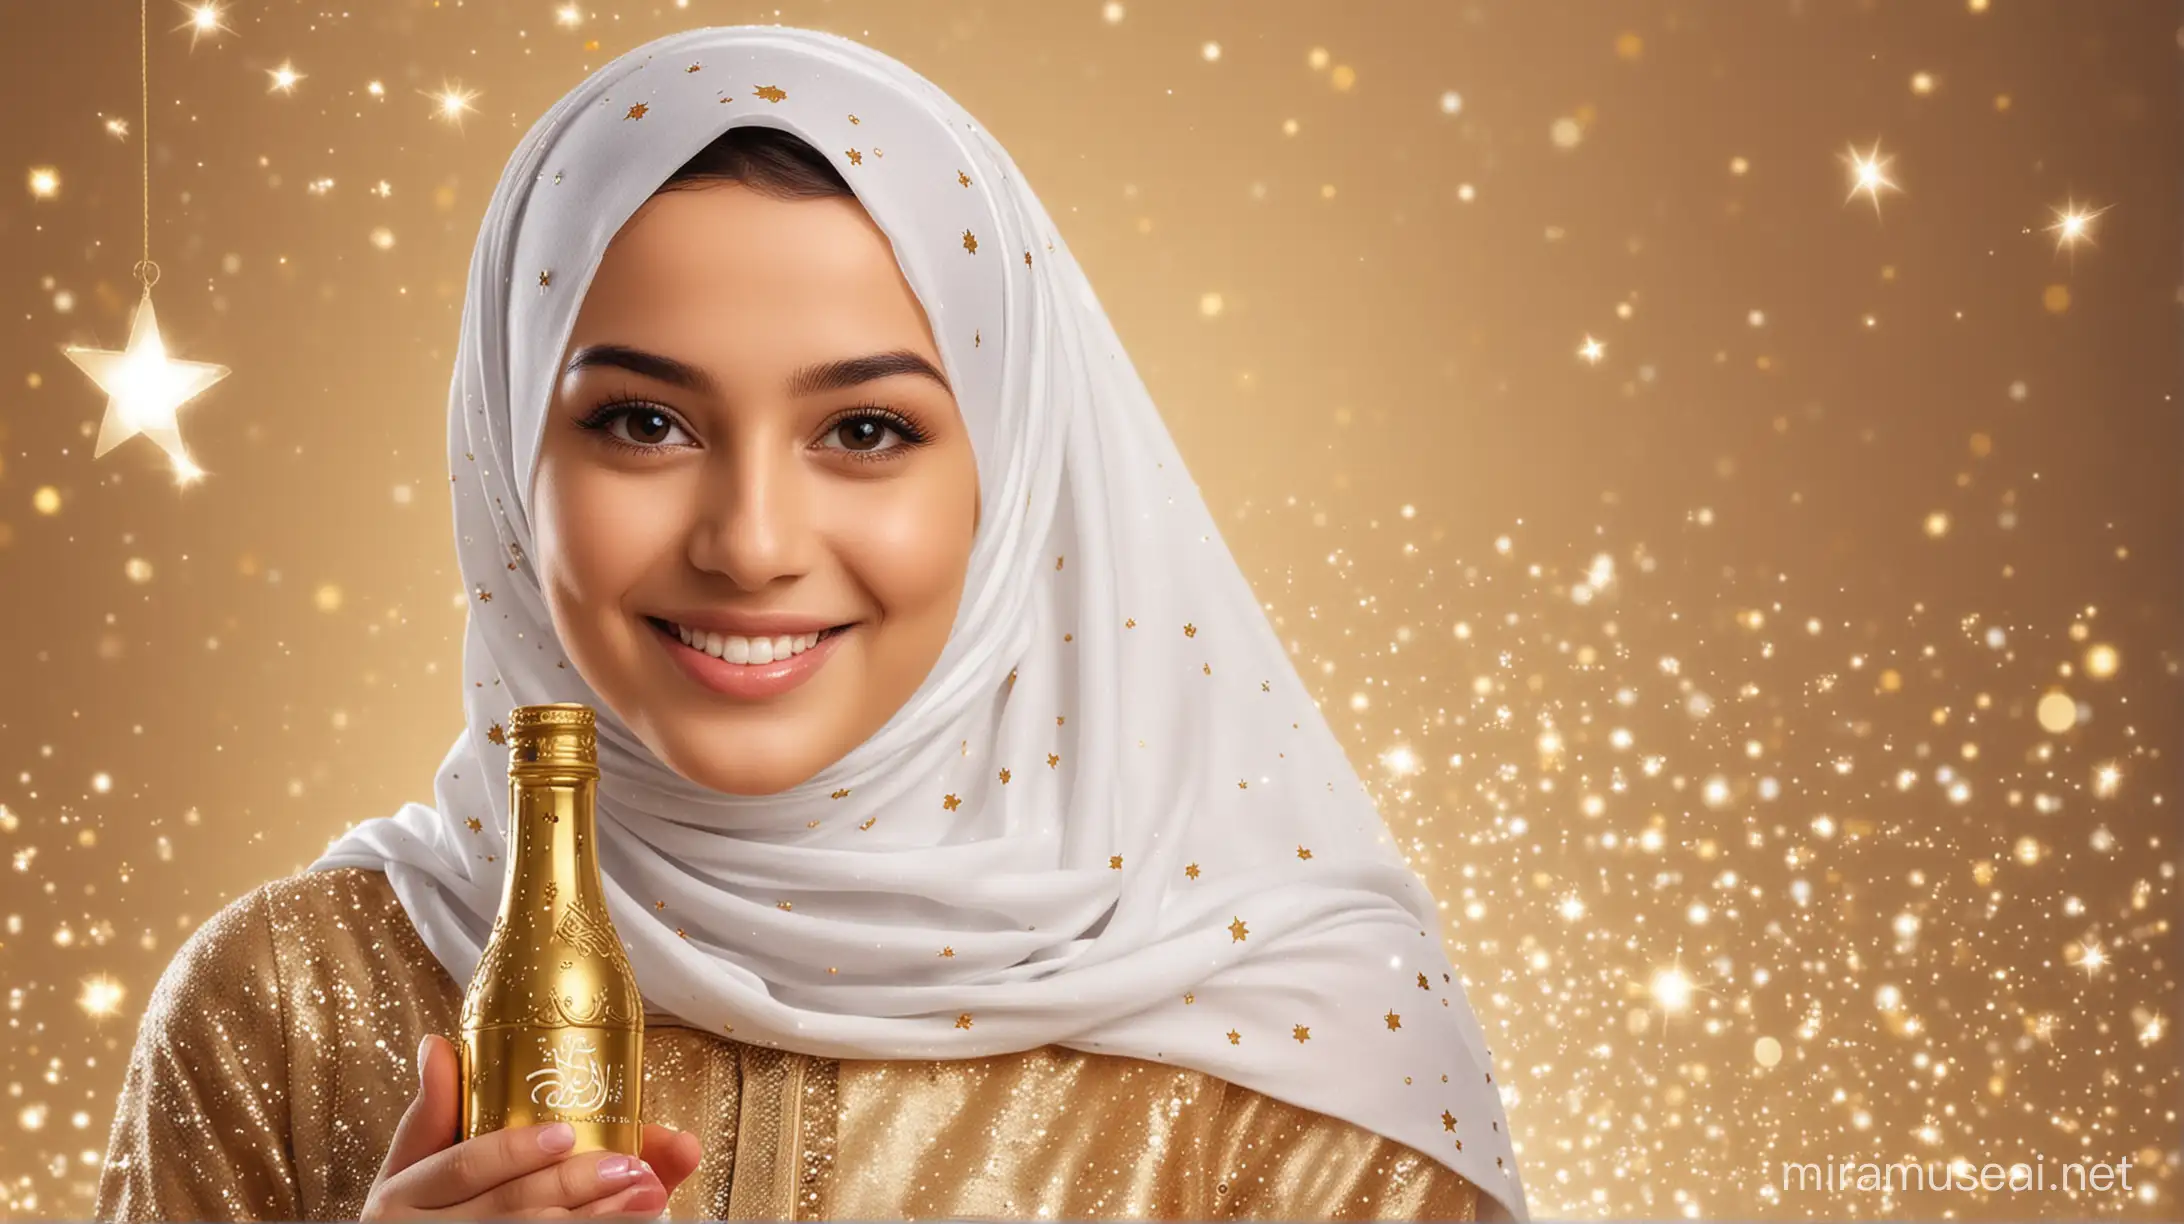 Charming Muslim Girl Celebrating Eid Festival with Joyful Smile and Traditional Attire